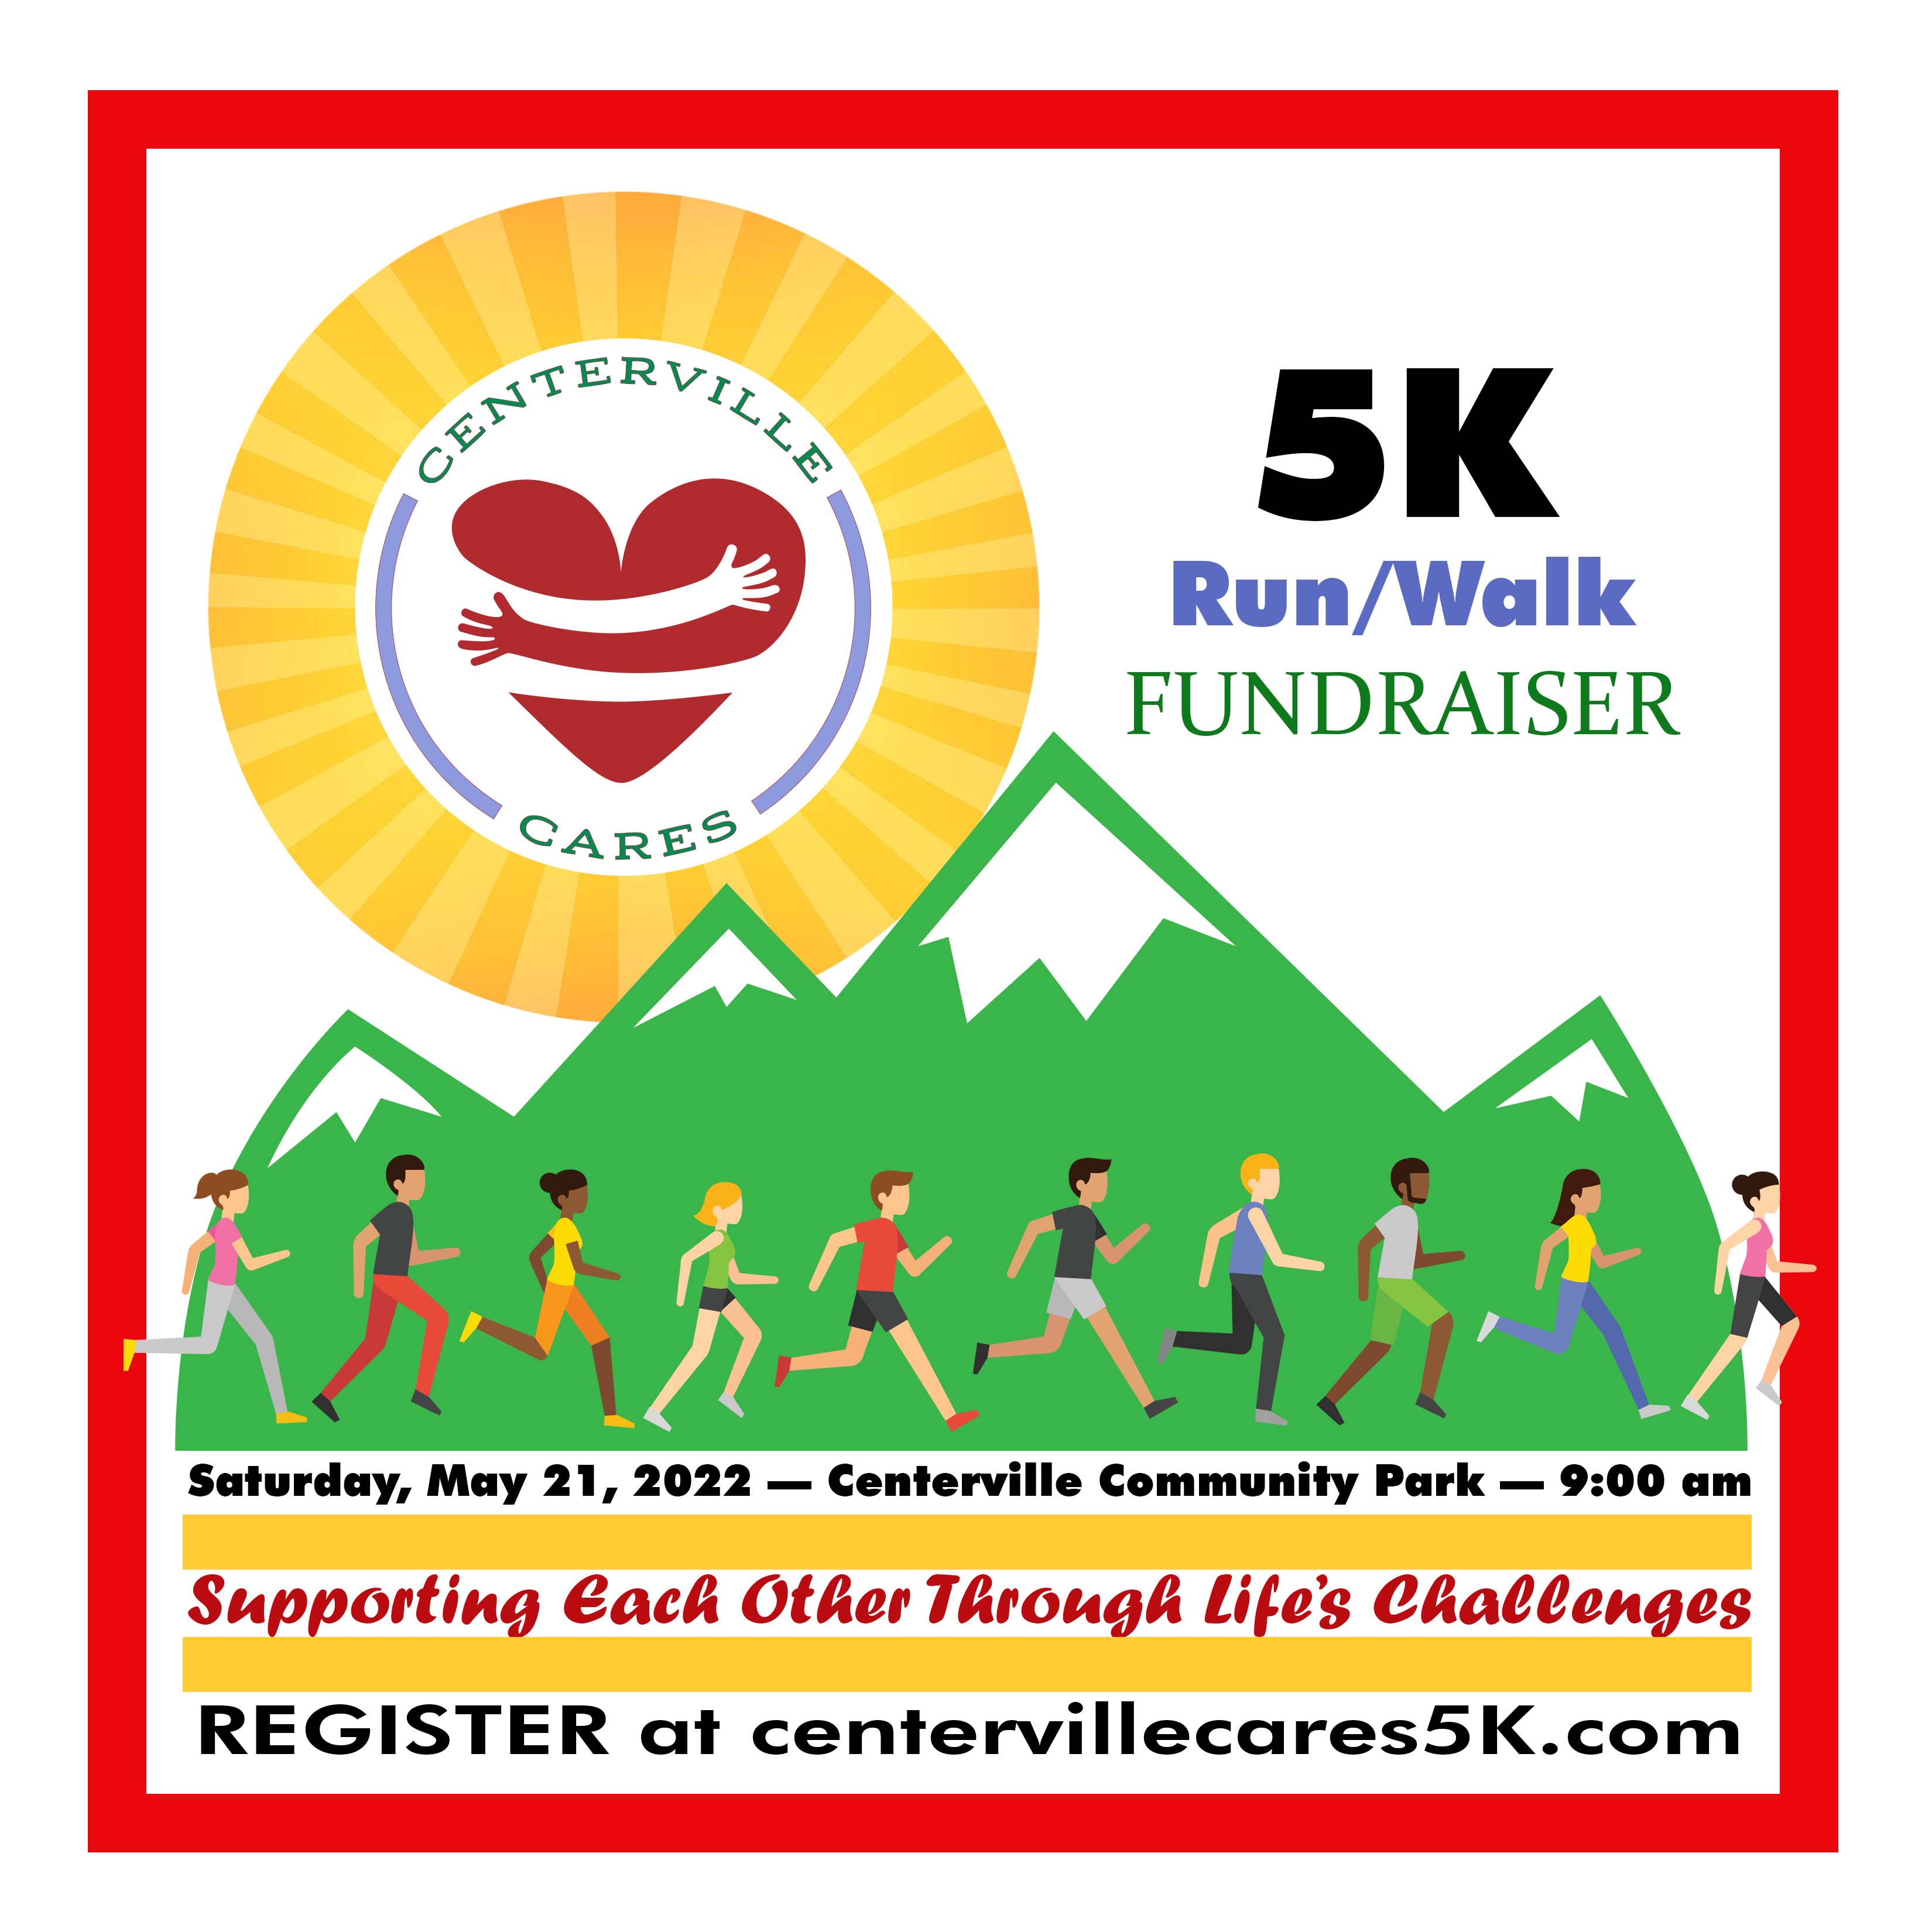 5K Run/Walk Fundraiser